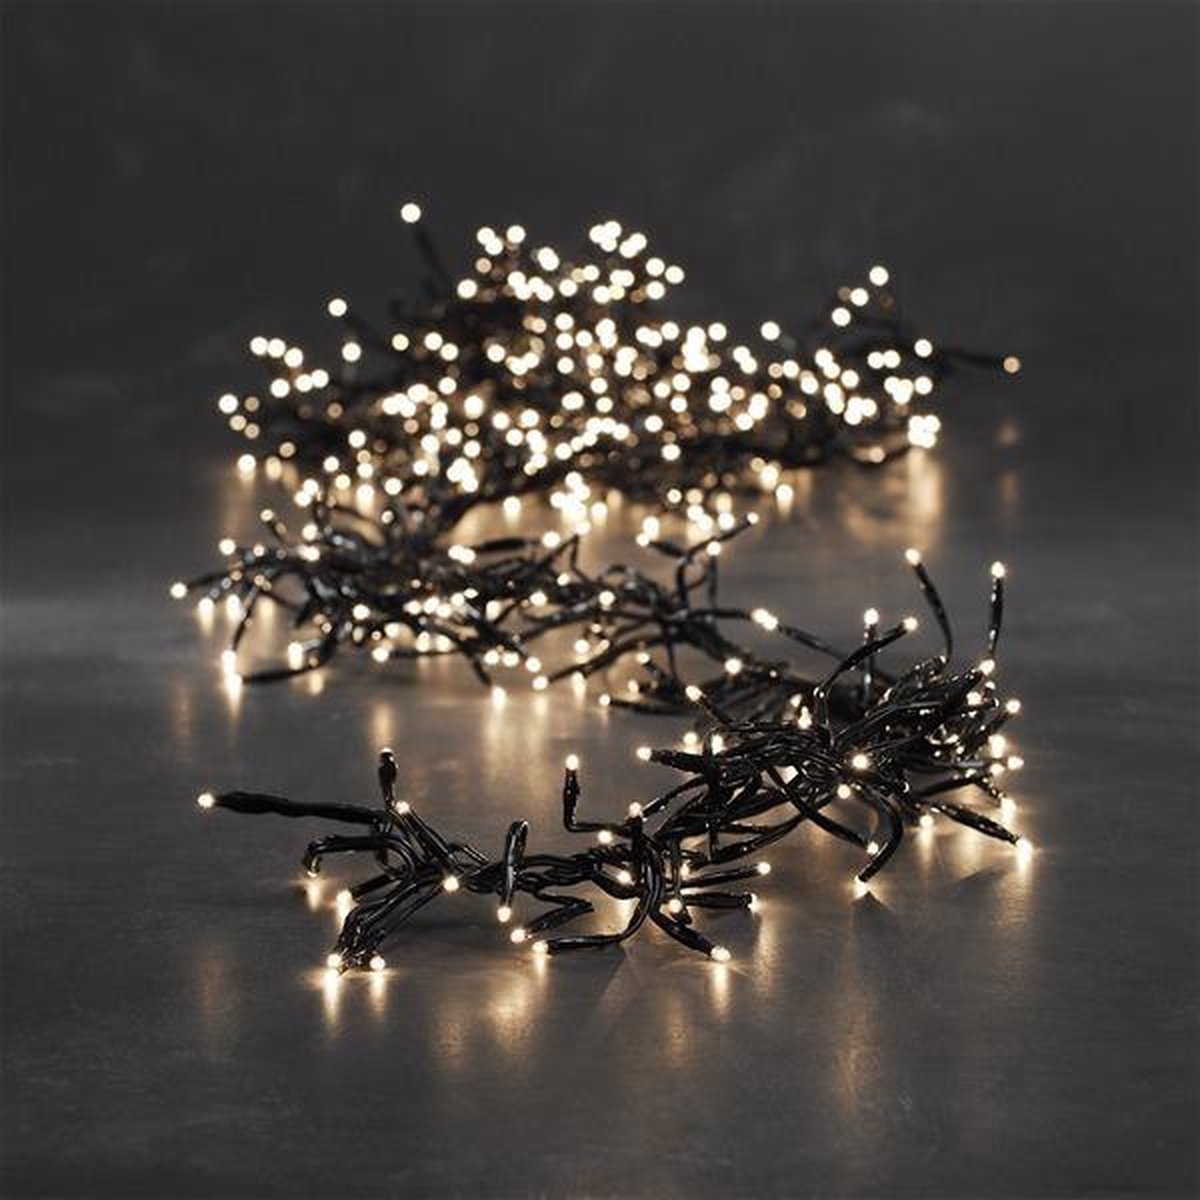 Meisterhome Cluster kerstboomverlichting - 6 m - Warm wit - 576 LED lampjes